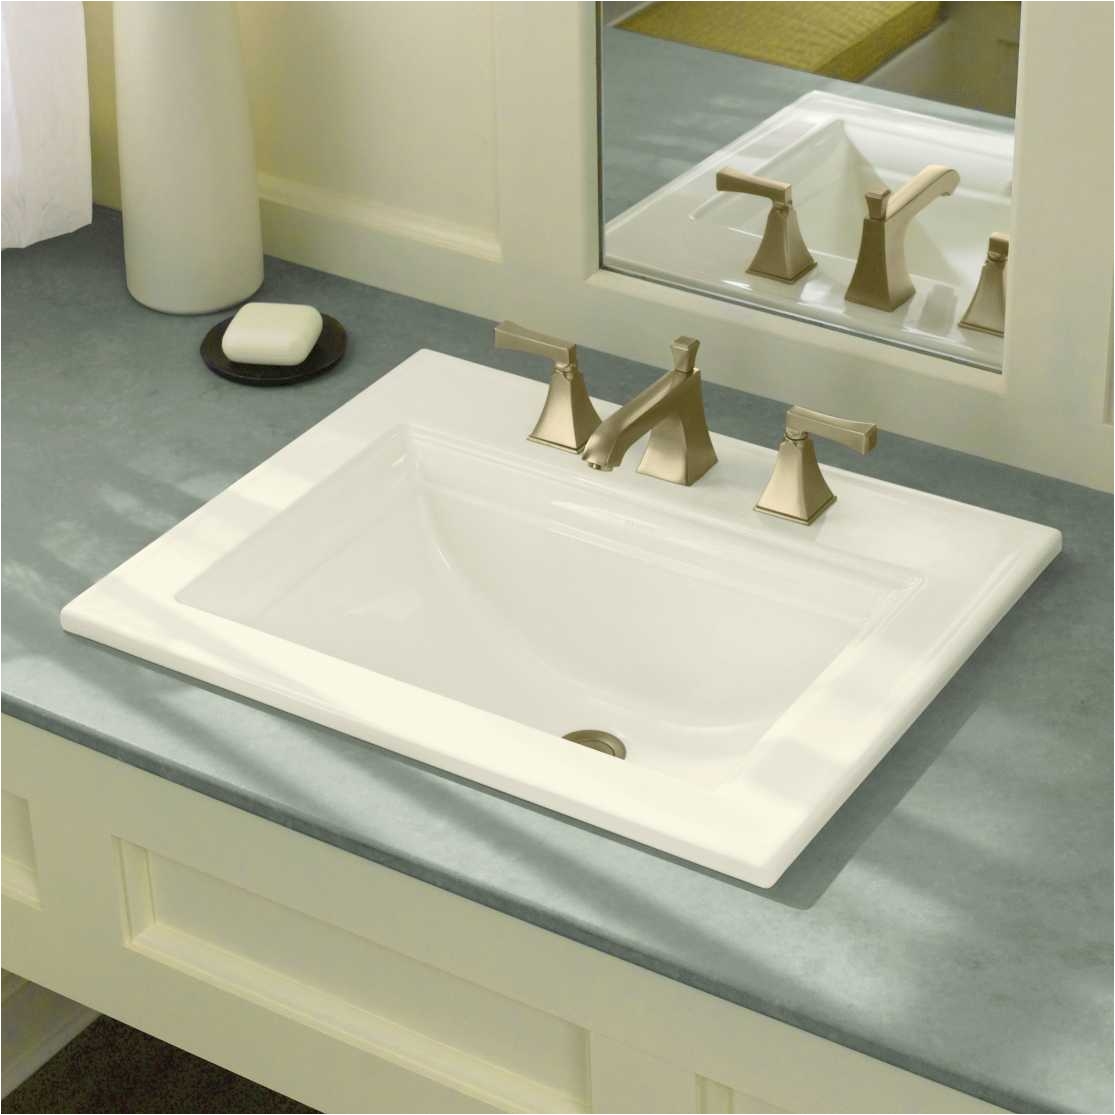 bathtub liners lowes choosed for elegant toilets lowes 0d gpyt info